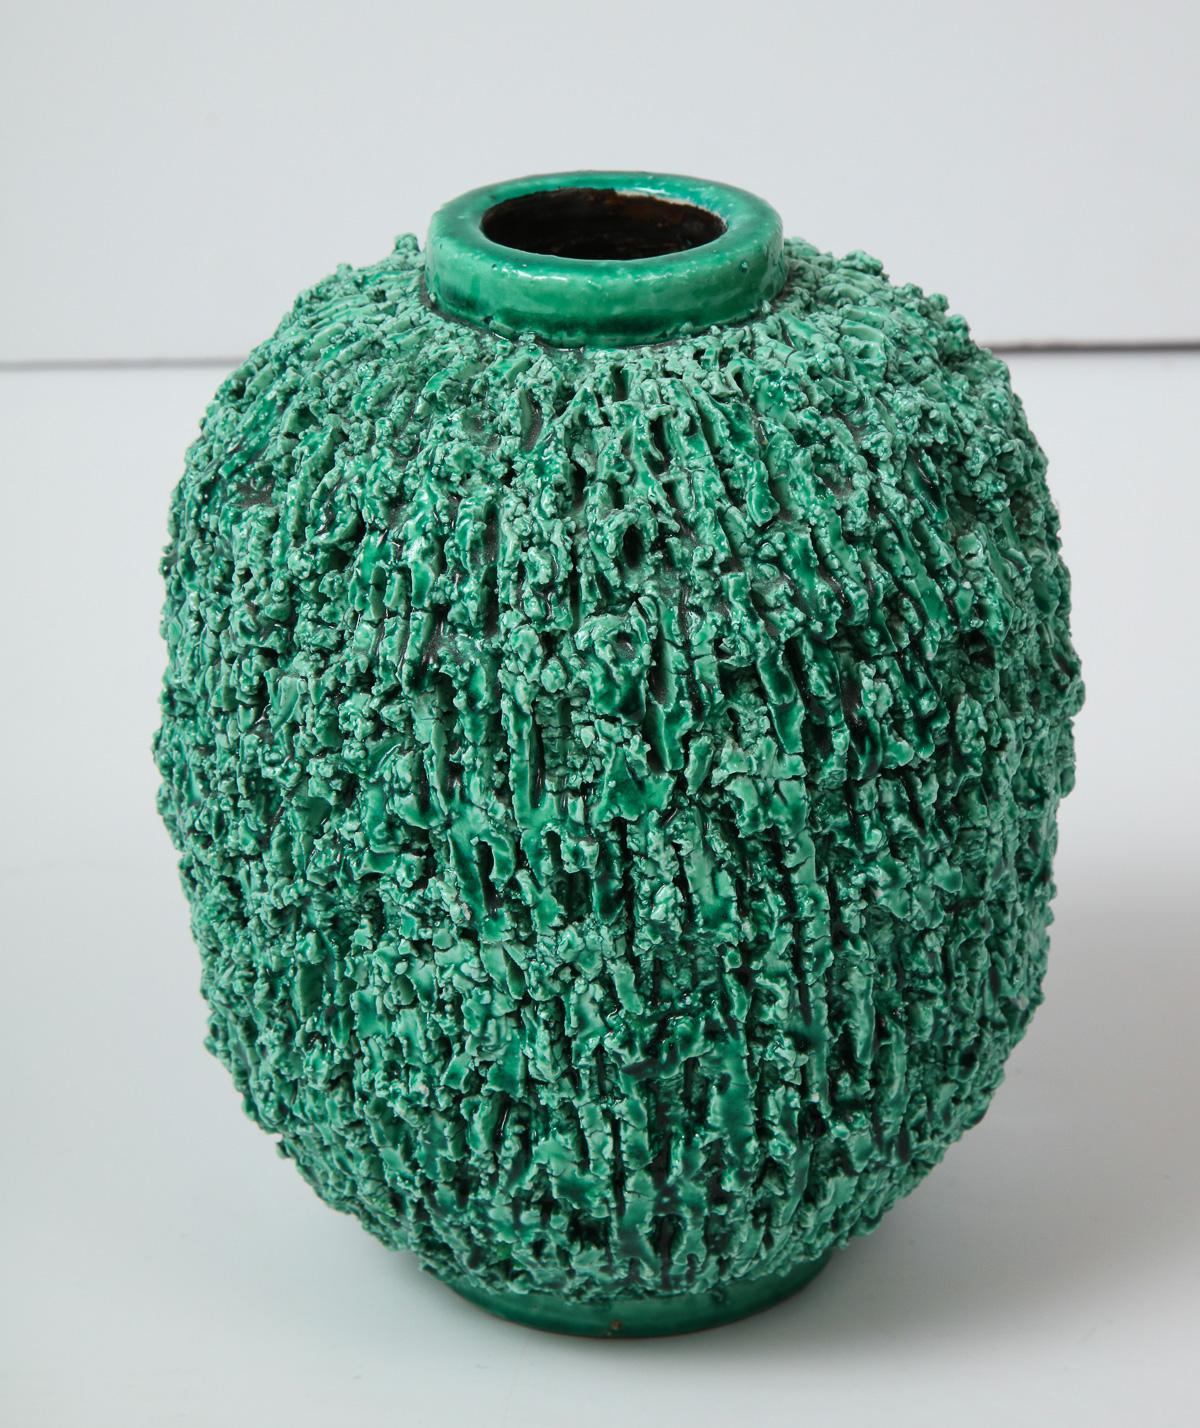 Mid-20th Century Ceramic Vase by Gunnar Nylund, Scandinavian, Green Vase, 